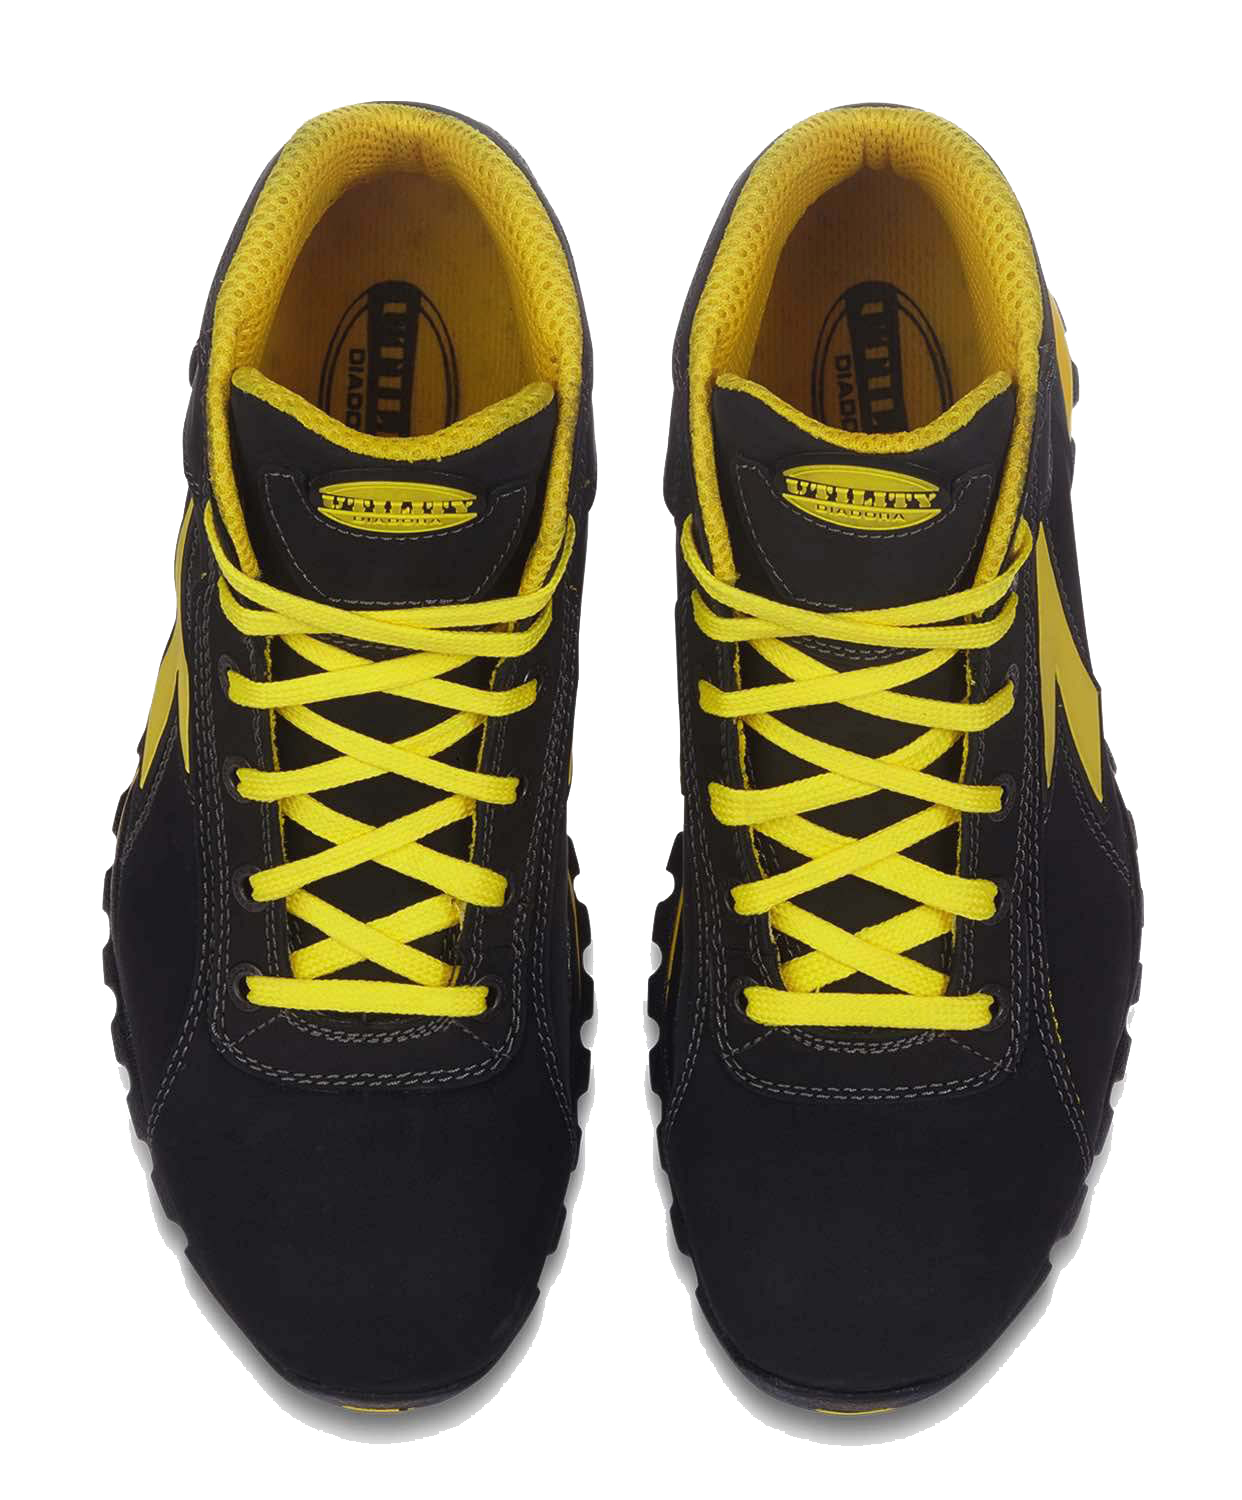 Chaussures de sécurité hautes GLOVE II HIGH S3 SRA HRO noir/jaune P45 - DIADORA SPA - 701.170234